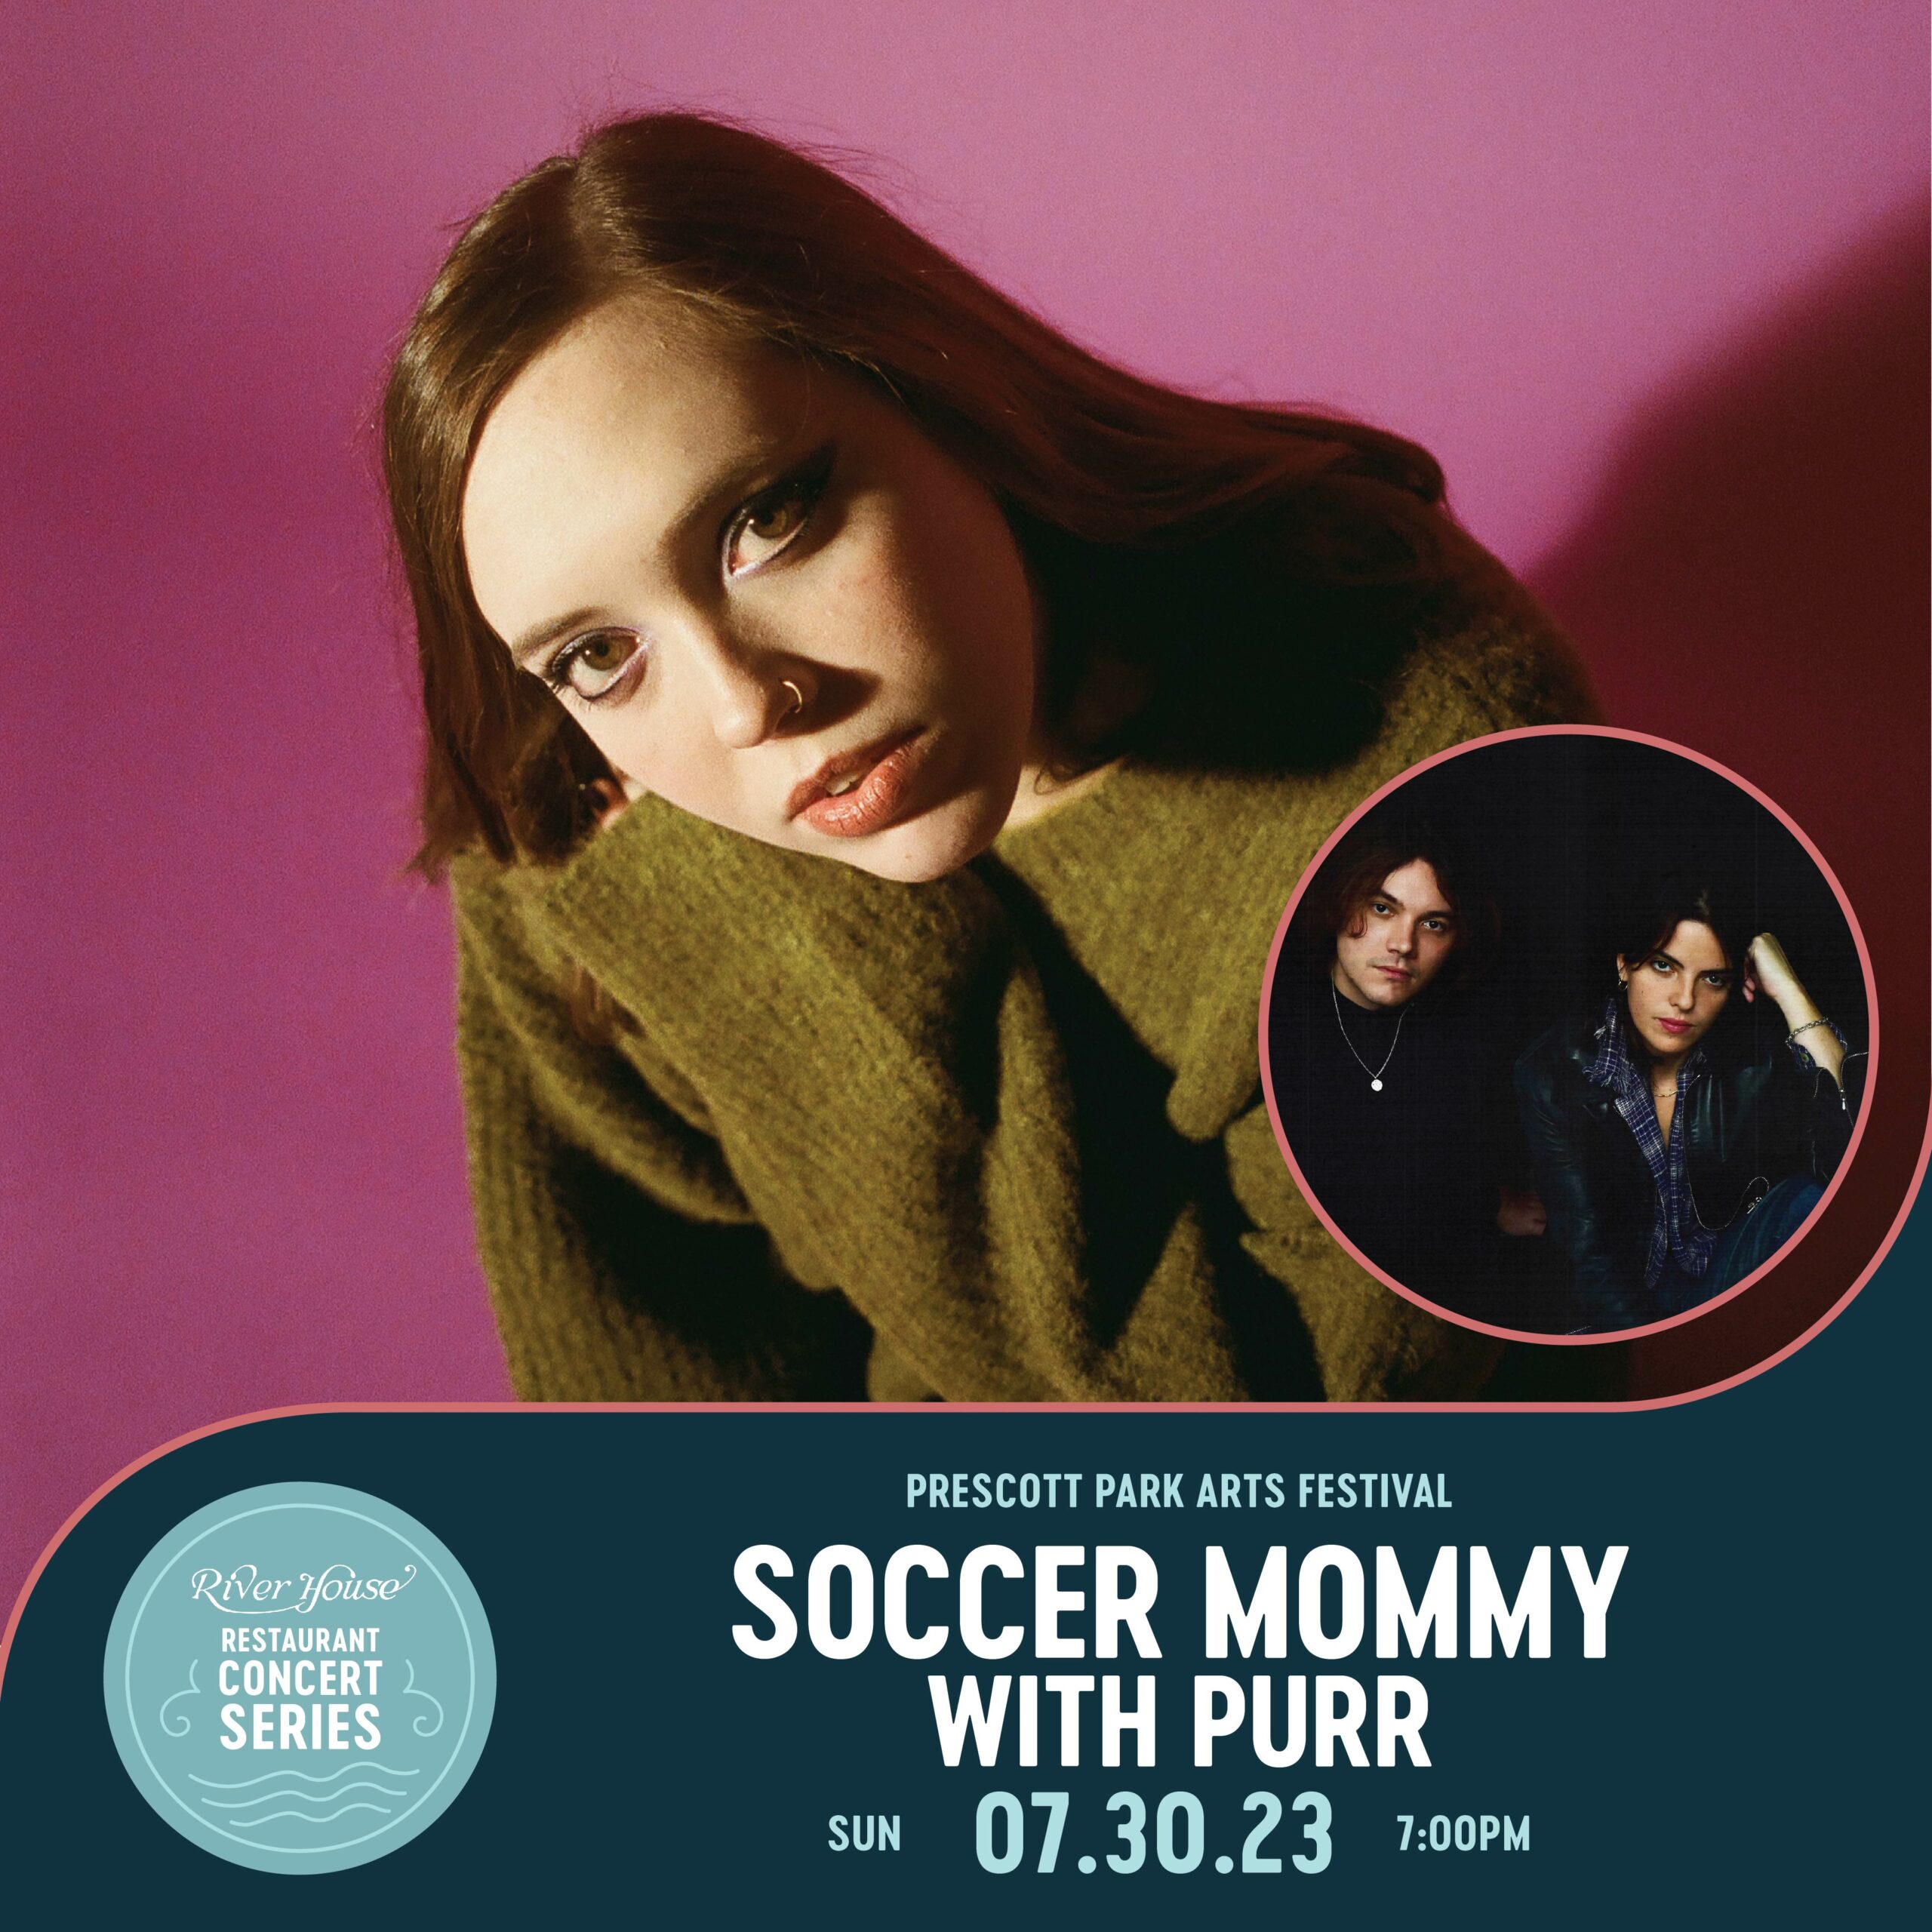 Soccer Mommy with Purr - Prescott Park Arts Festival